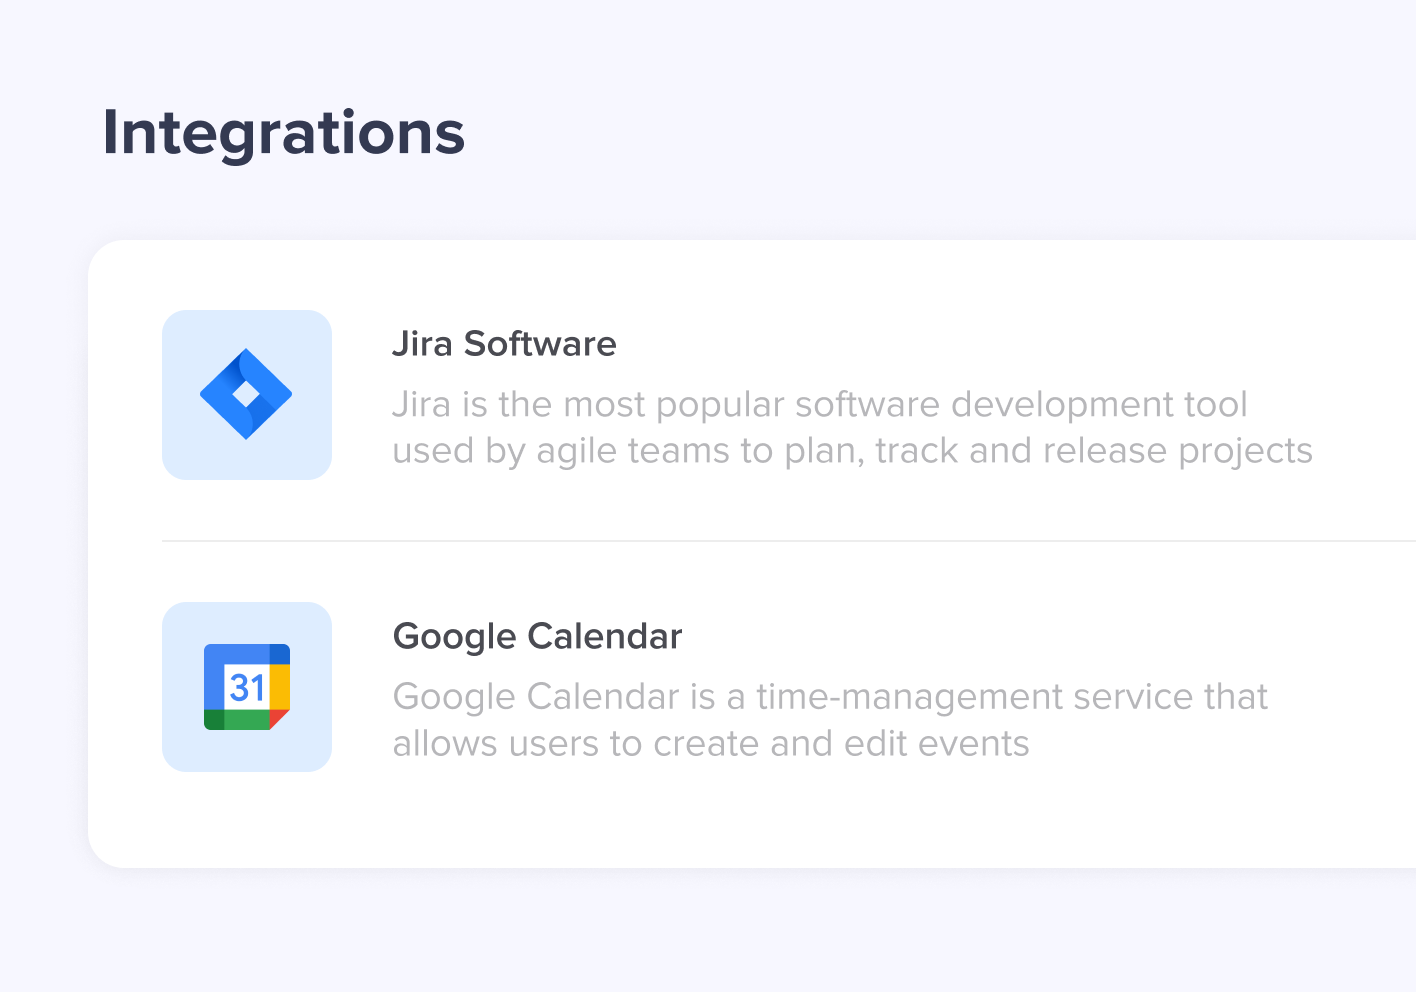 Integration with Jira and Google Calendar